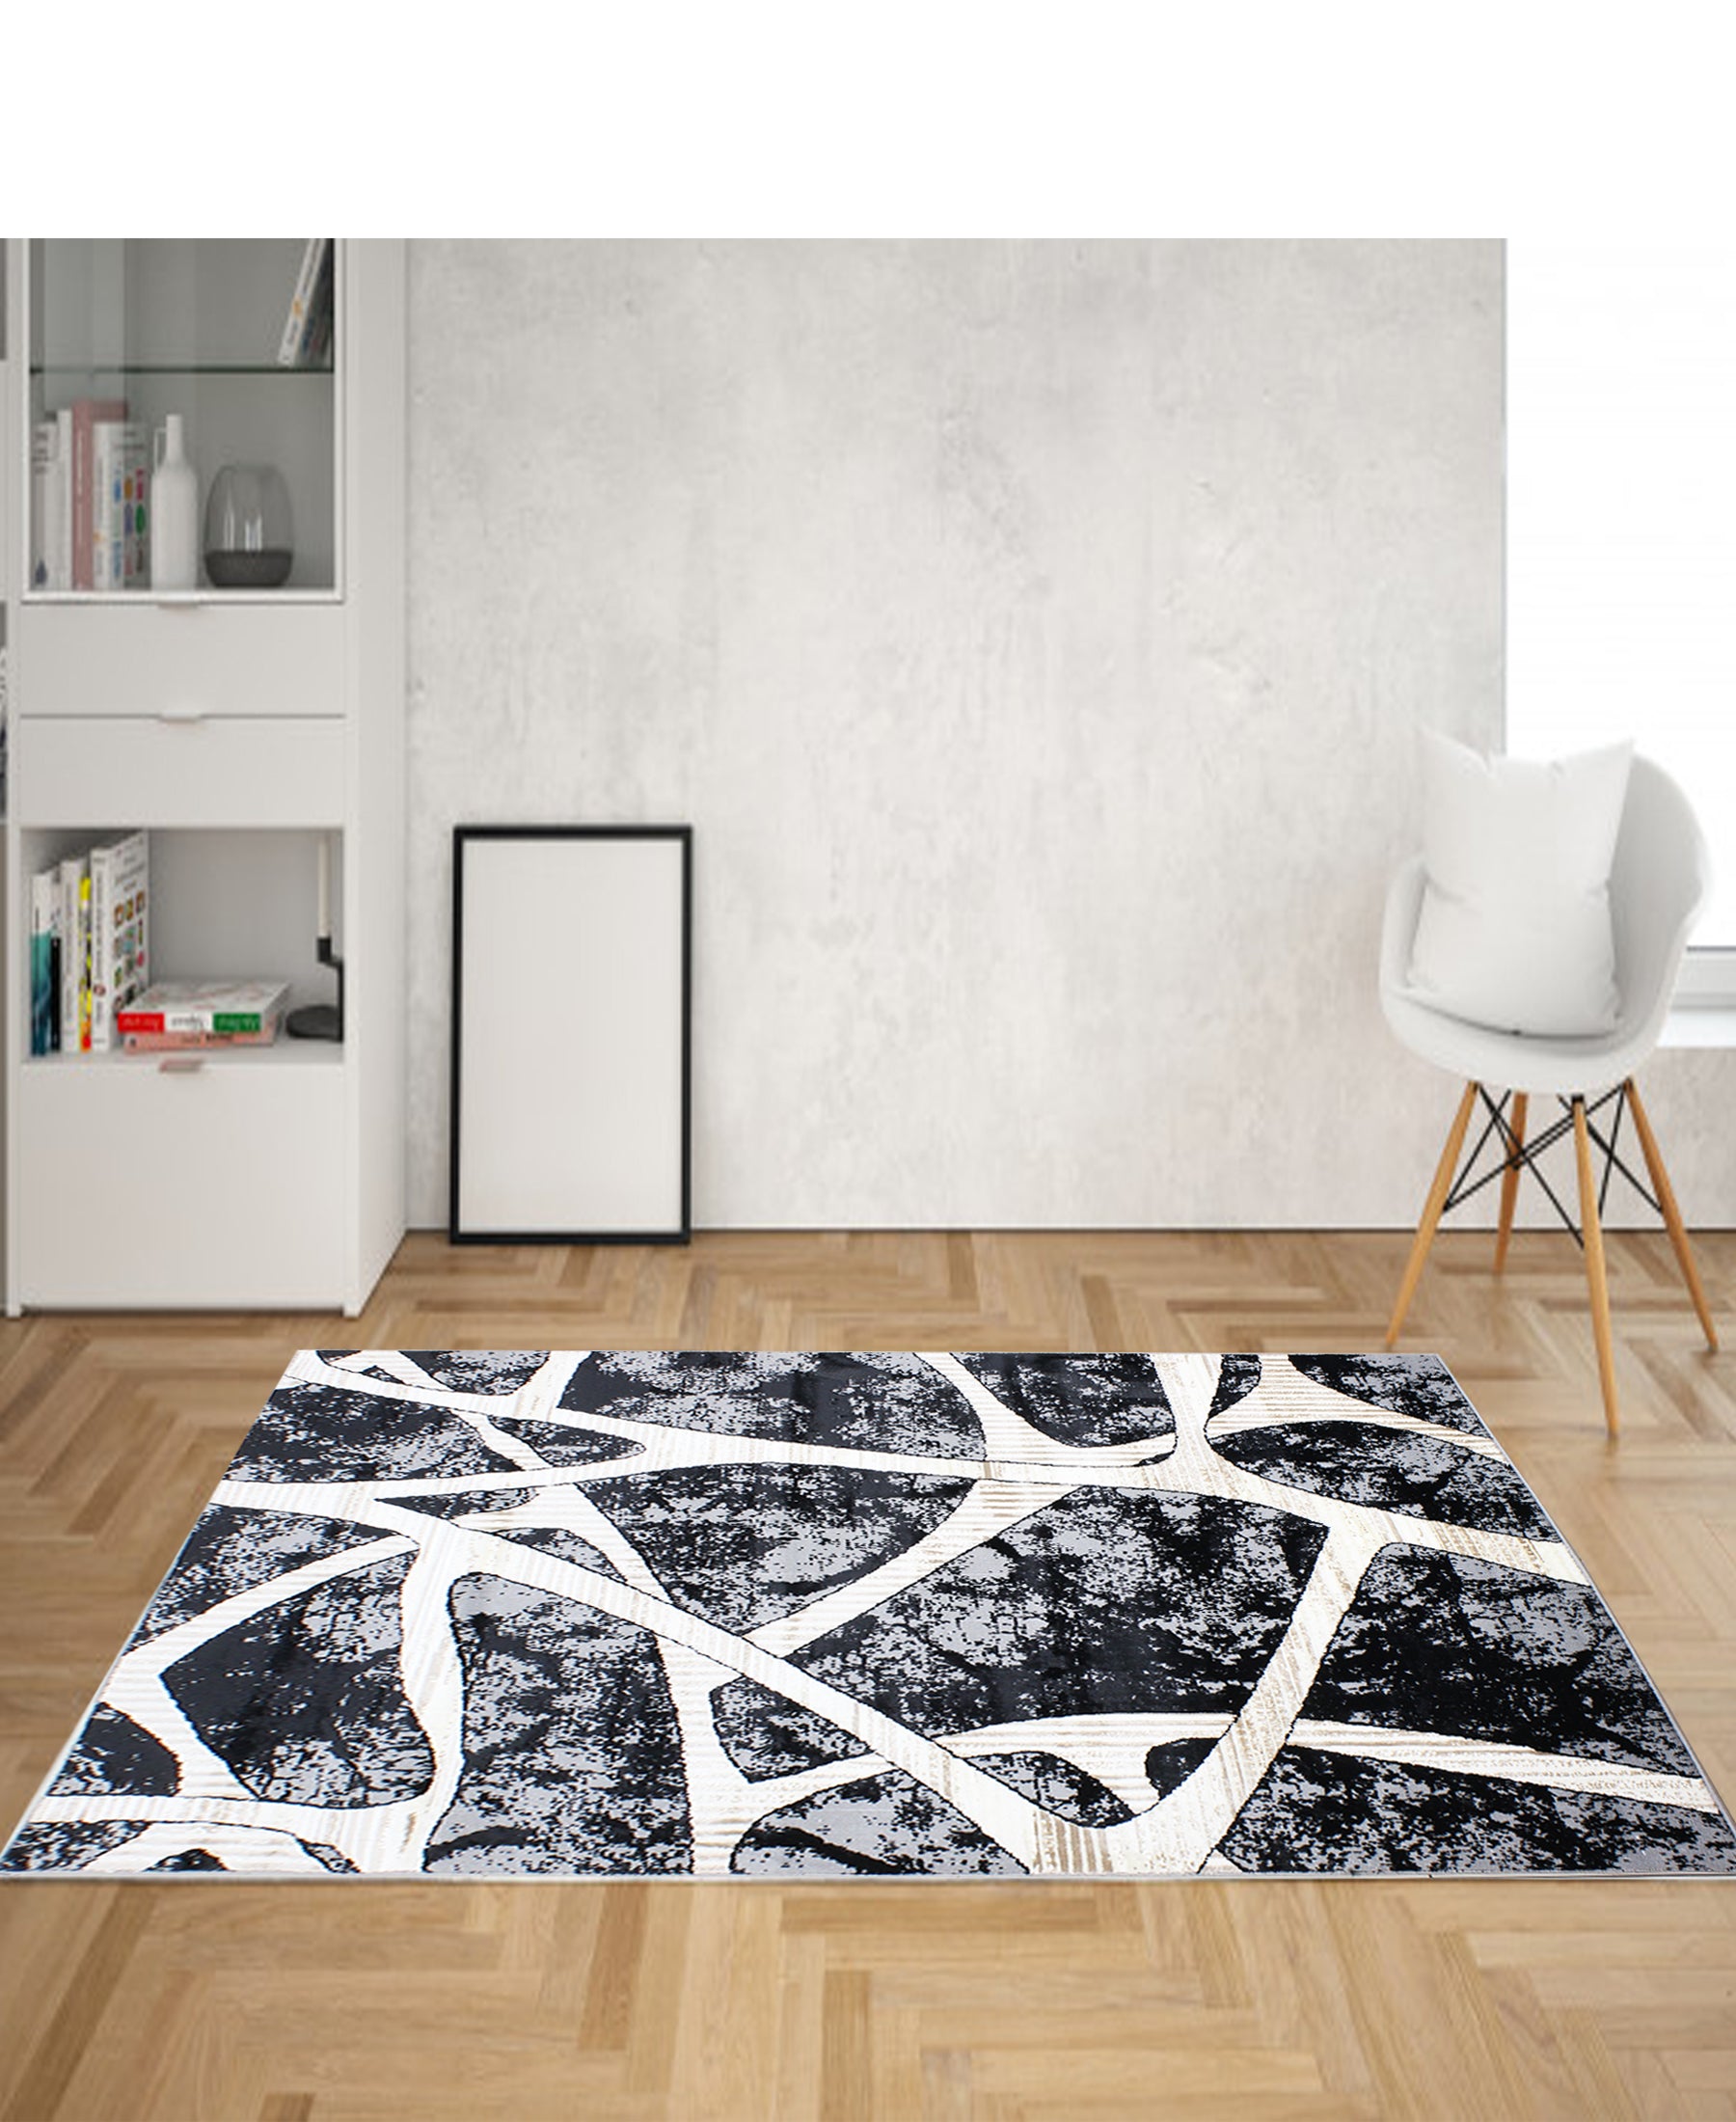 Damascus Swerve Carpet 500mm x 800mm - Black & Grey